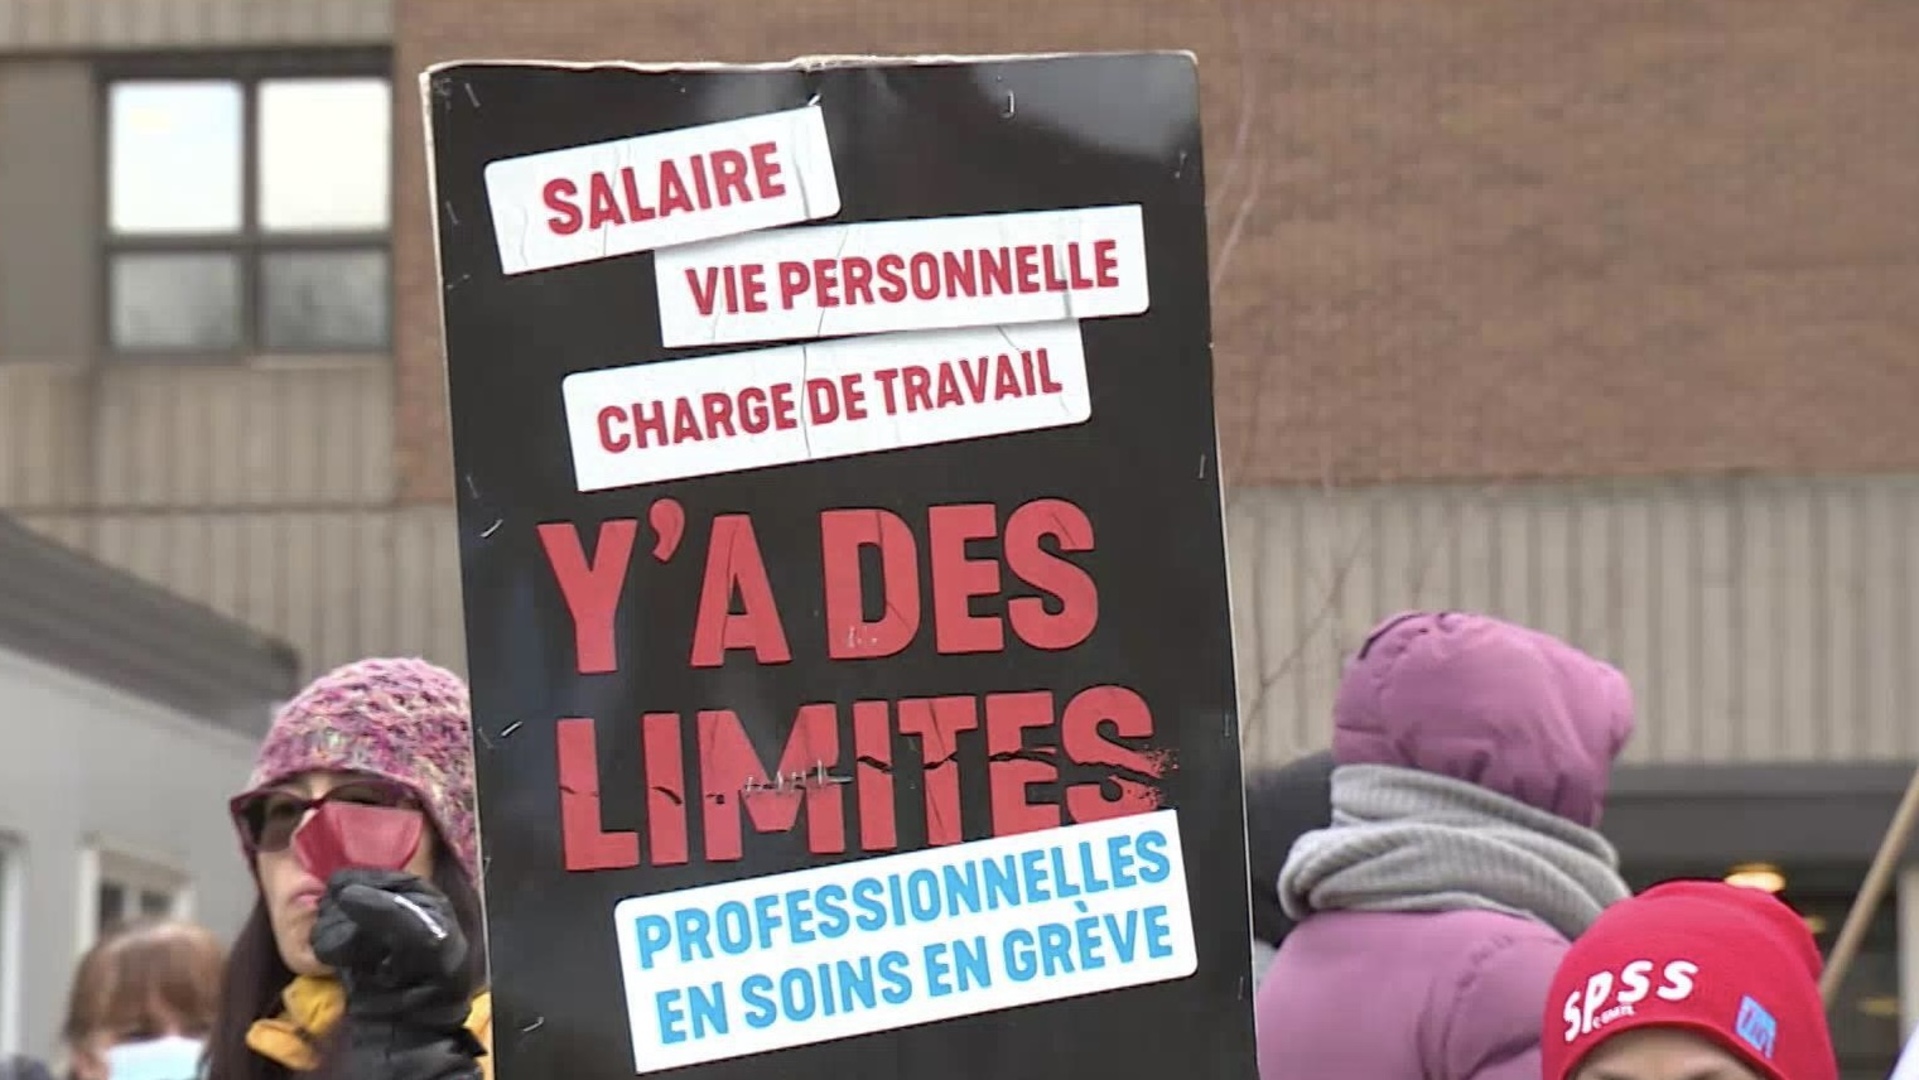 FIQ nurses’ union ready to resume negotiations with Quebec